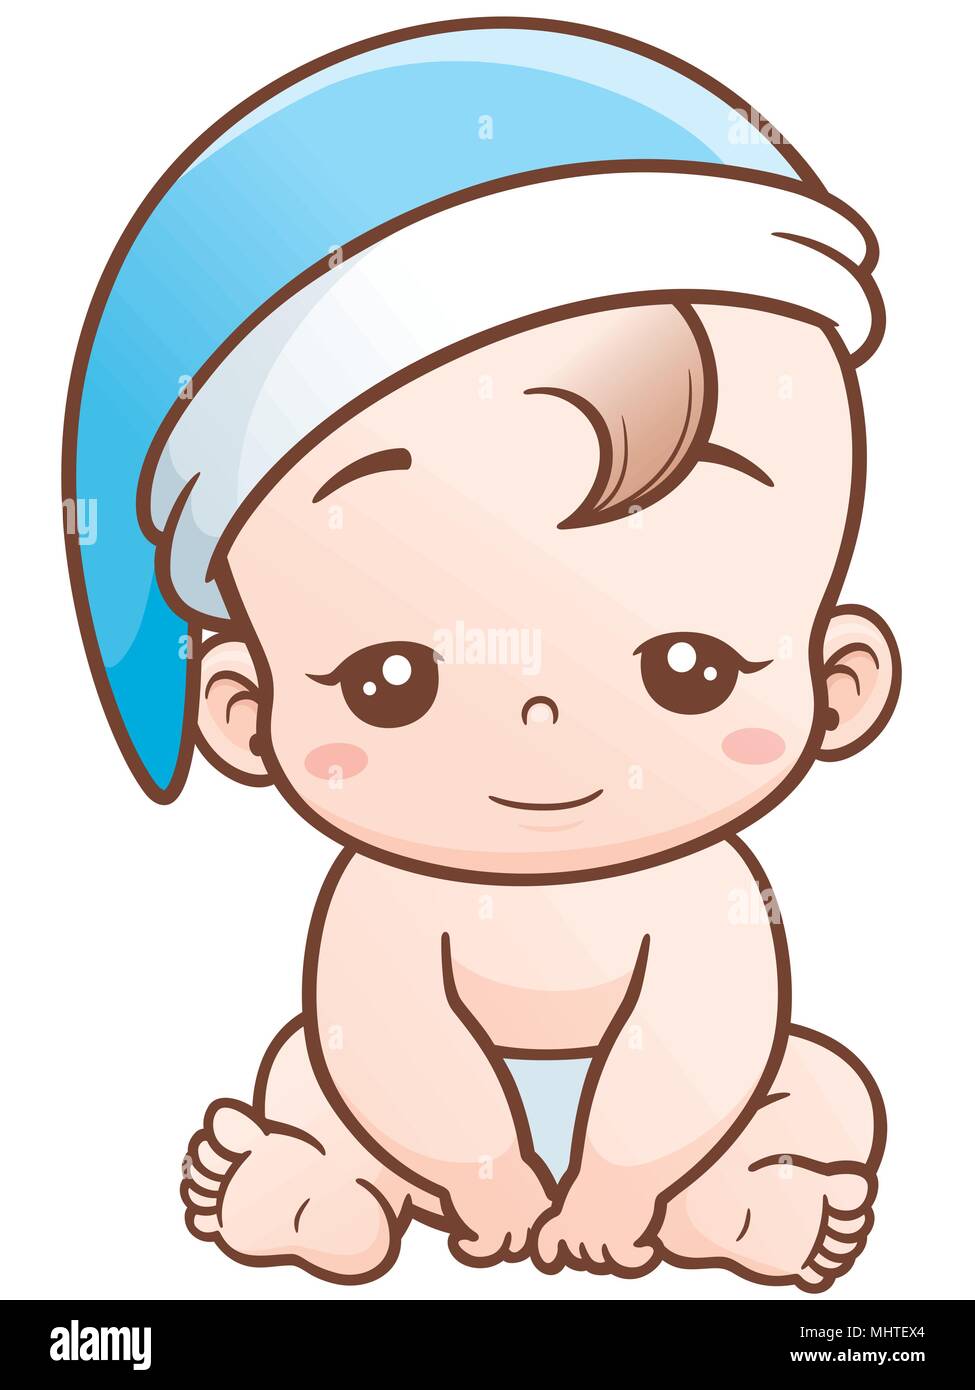 Sketch Baby Portrait Looking Interest Hand Stock Vector (Royalty Free)  788098141 | Shutterstock